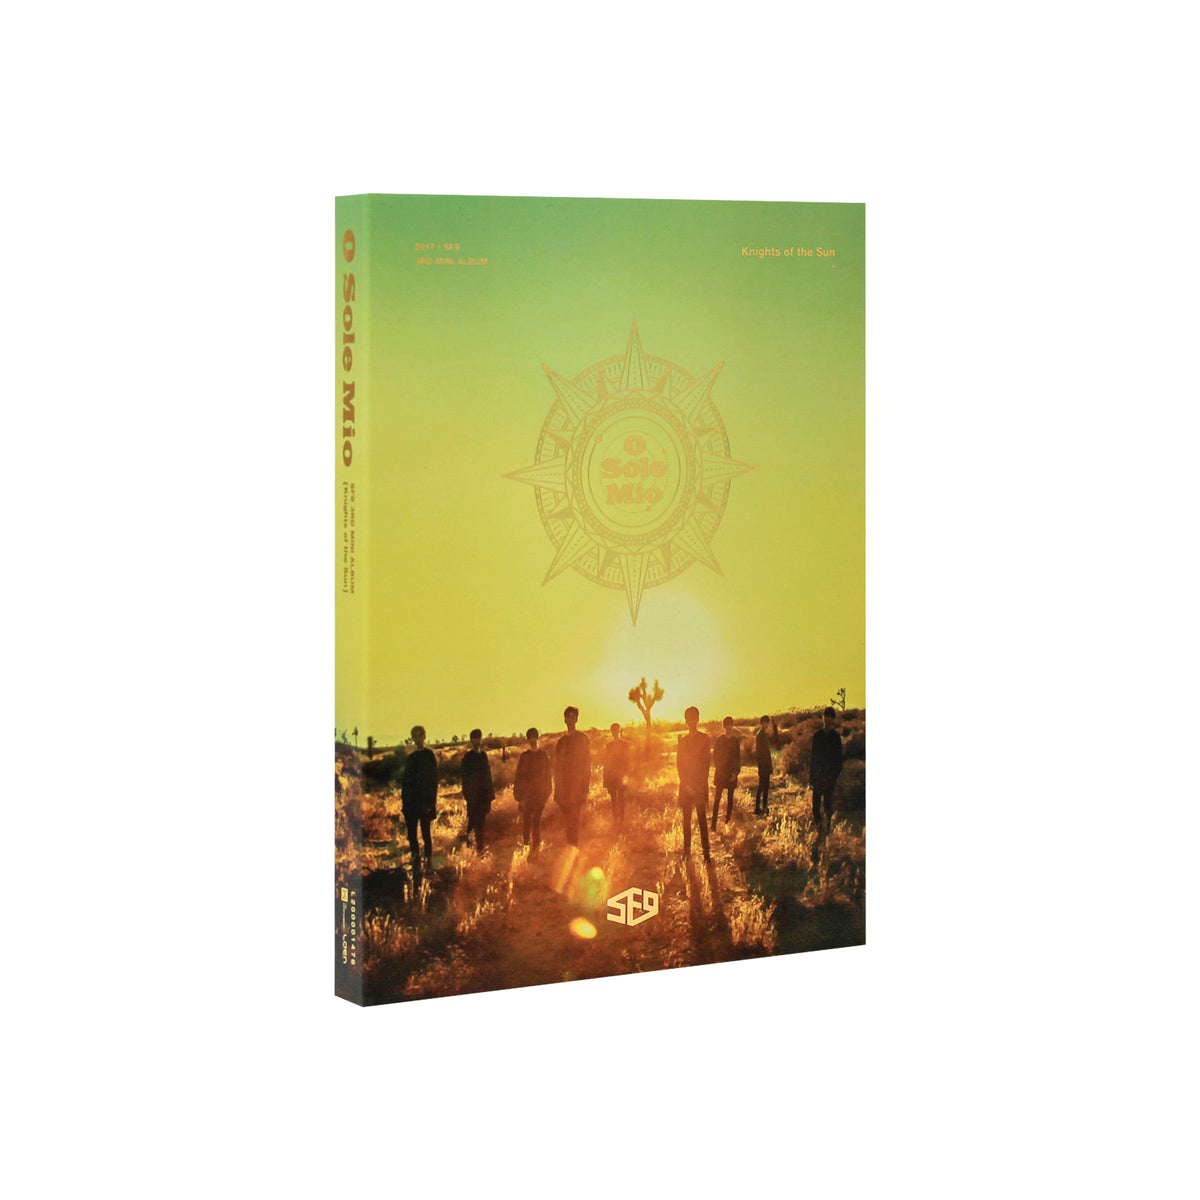 SF9 - Knights of the Sun 3rd Mini Album - main image - image 2